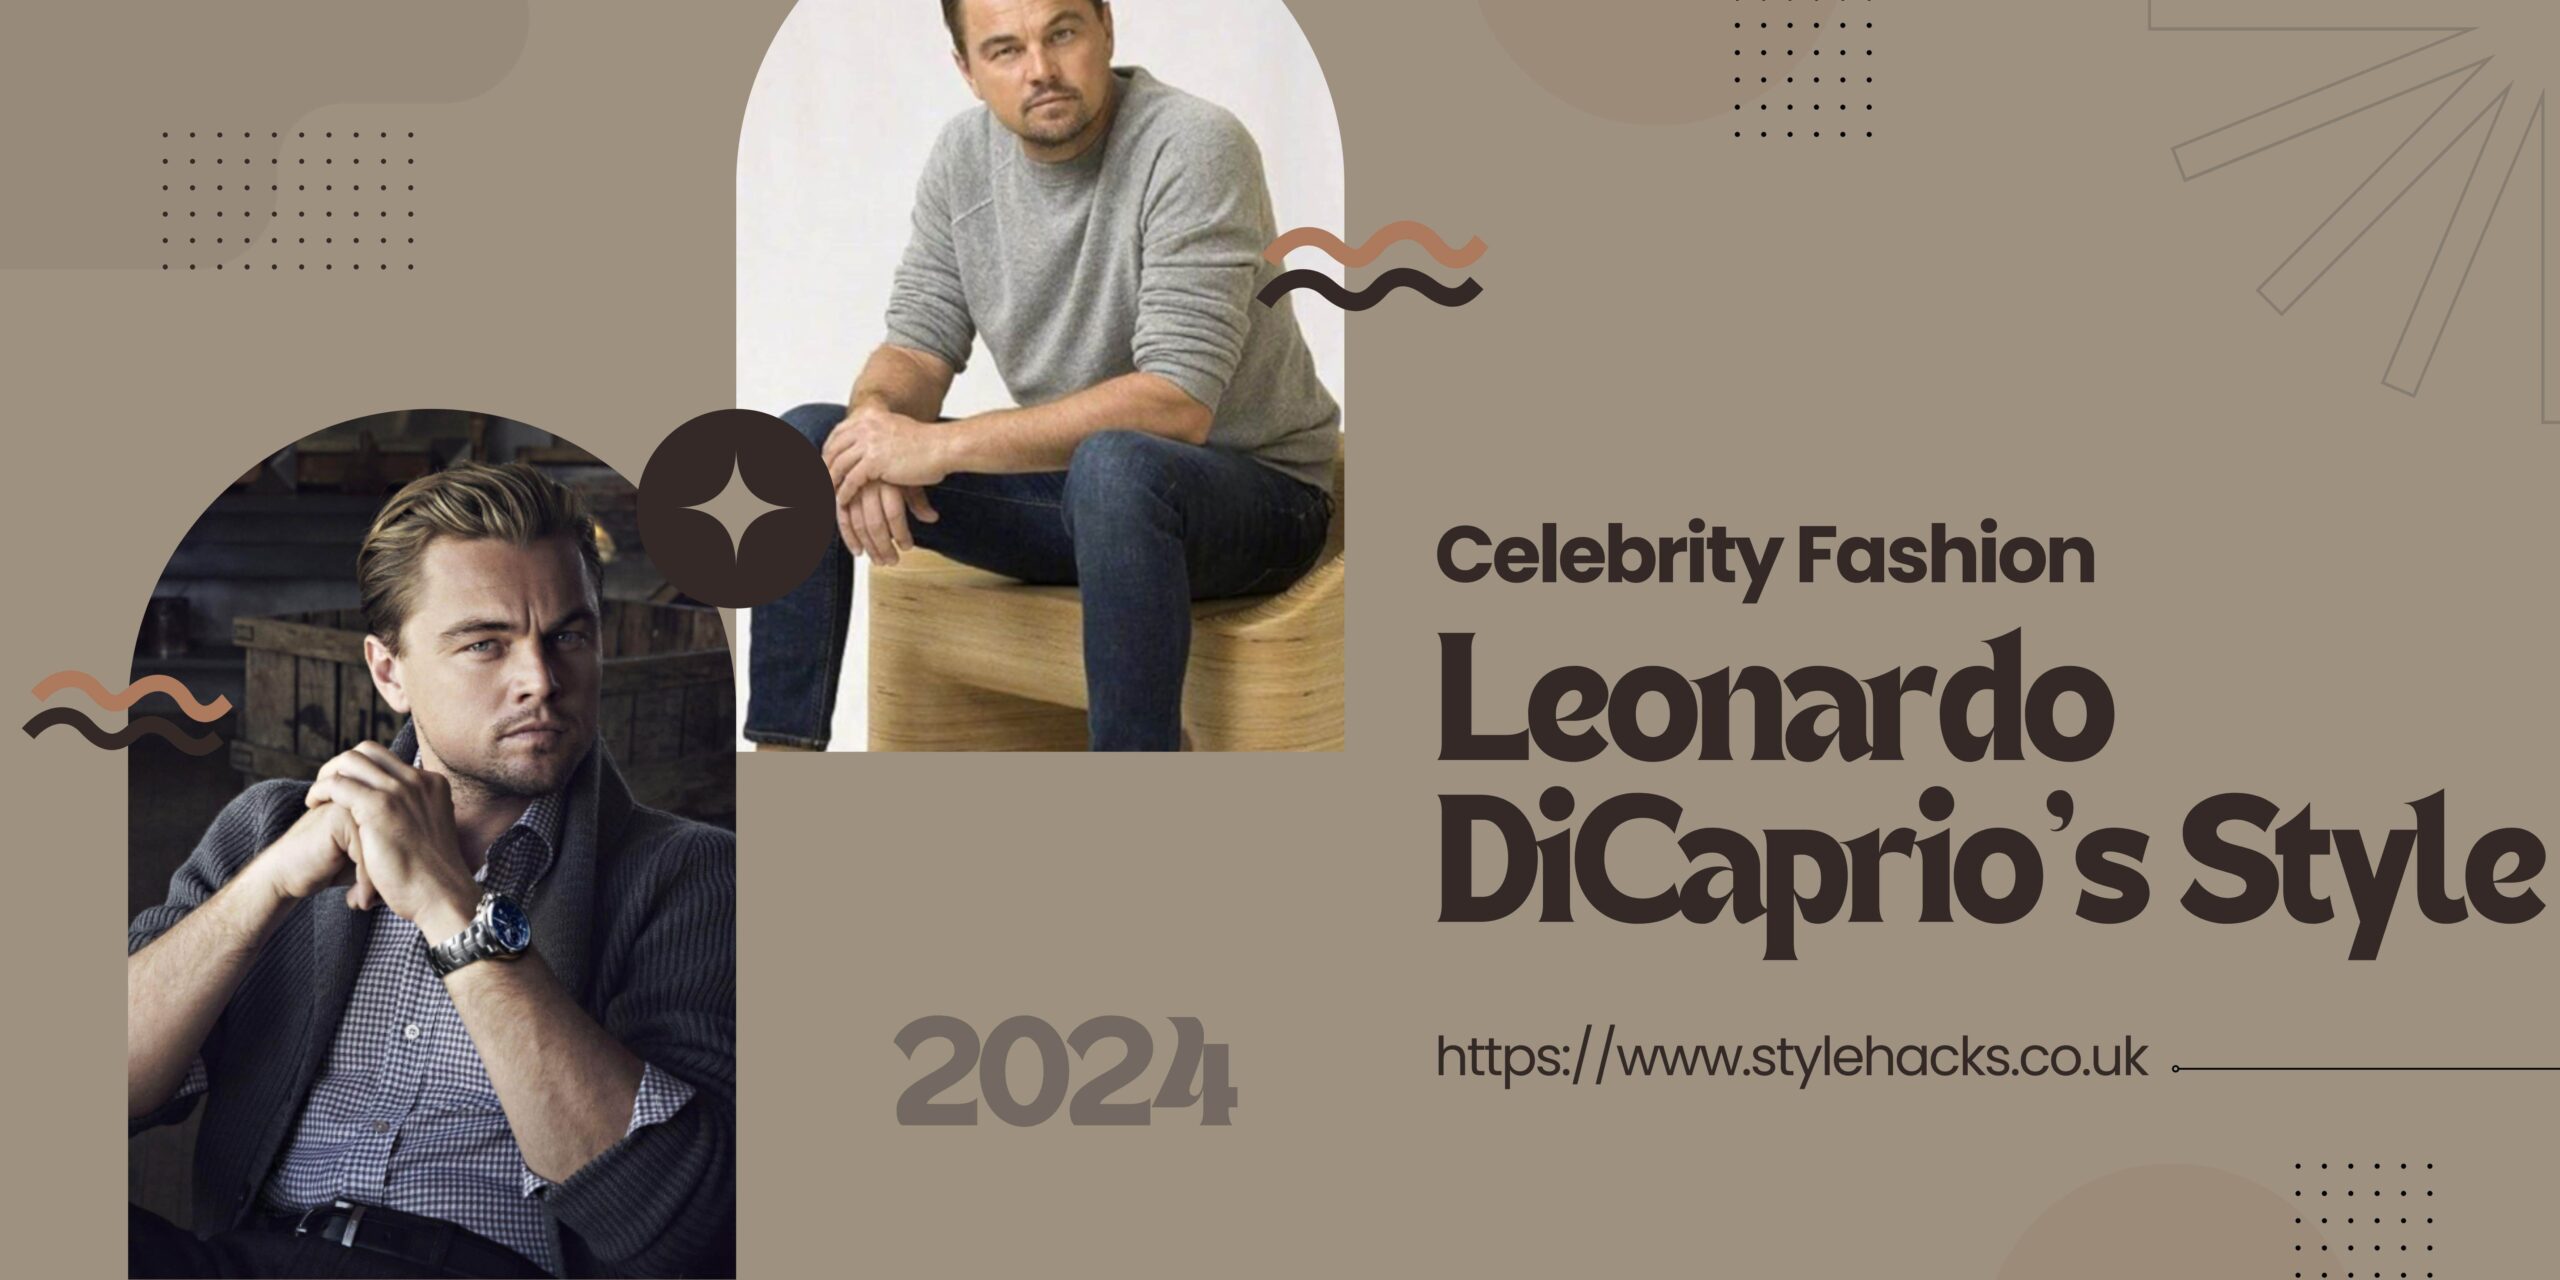 Budget-Friendly Celebrity Fashion: Recreate Leonardo DiCaprio’s Style on a Budget